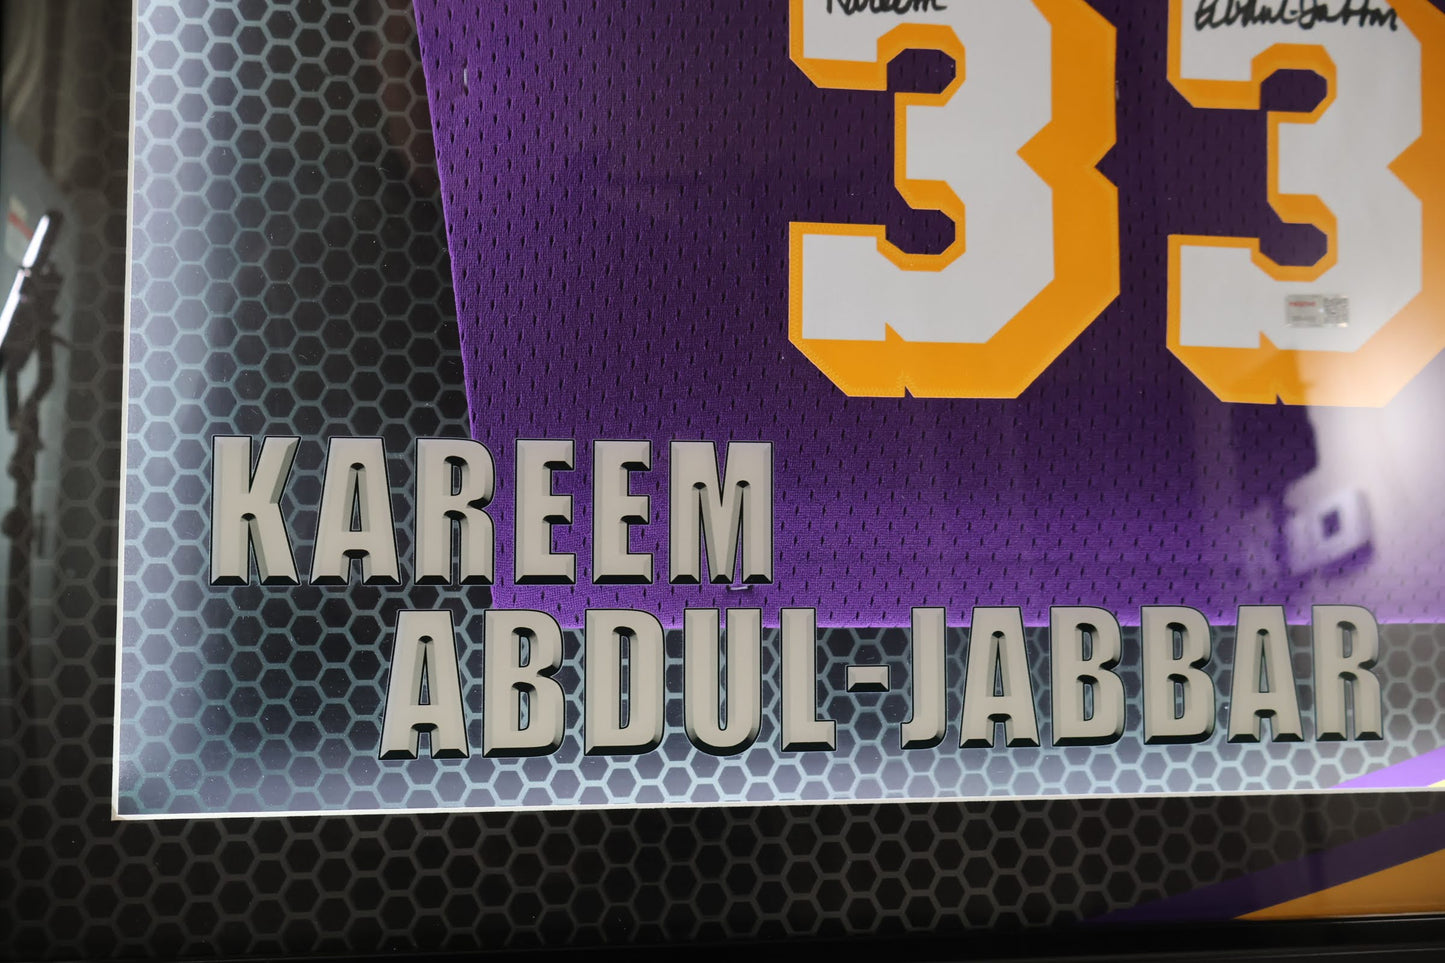 Kareem Abdul-Jabbar Laker Signed Jersey LED Shadowbox (Tri Star Hologram and COA)